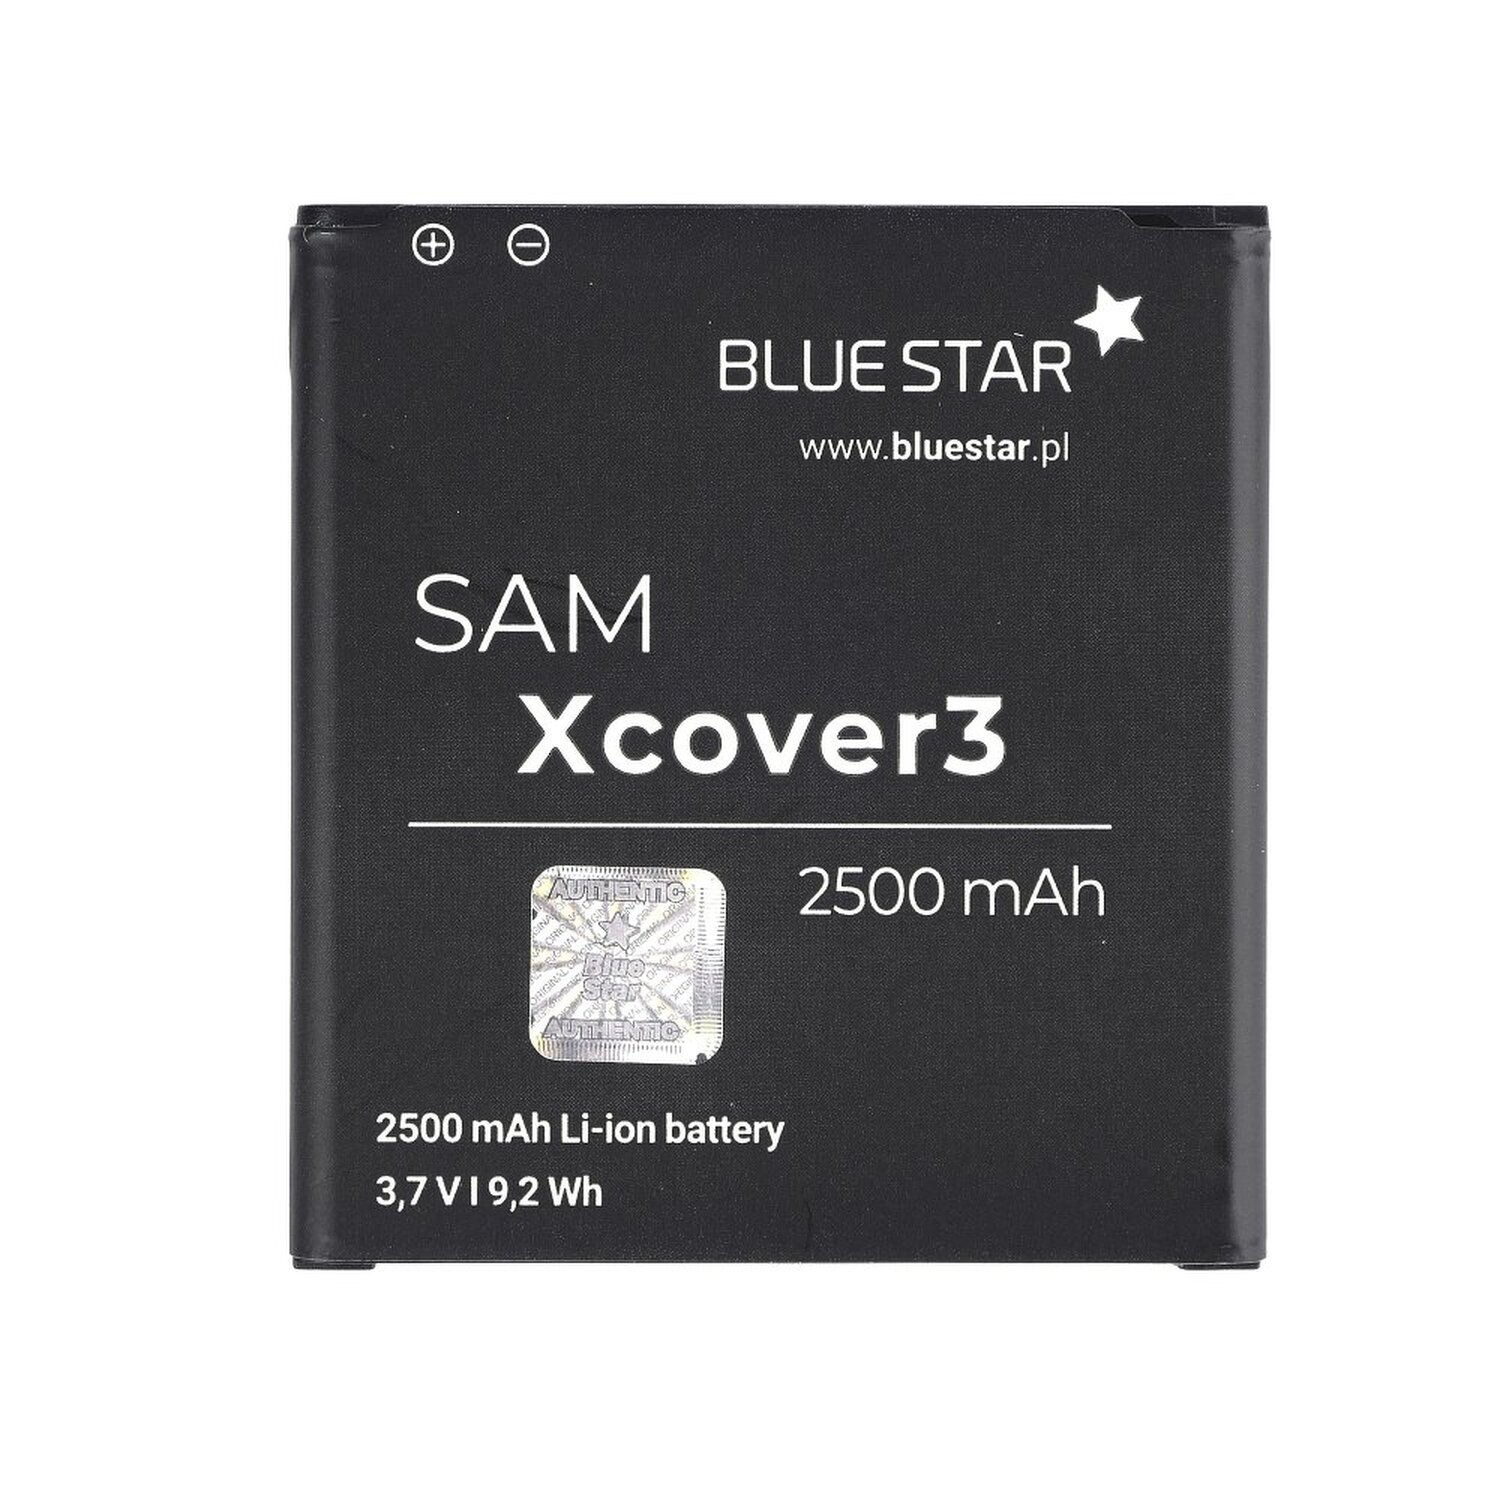 Handyakku Samsung Galaxy Xcover Li-Ion Akku für 3 BLUESTAR